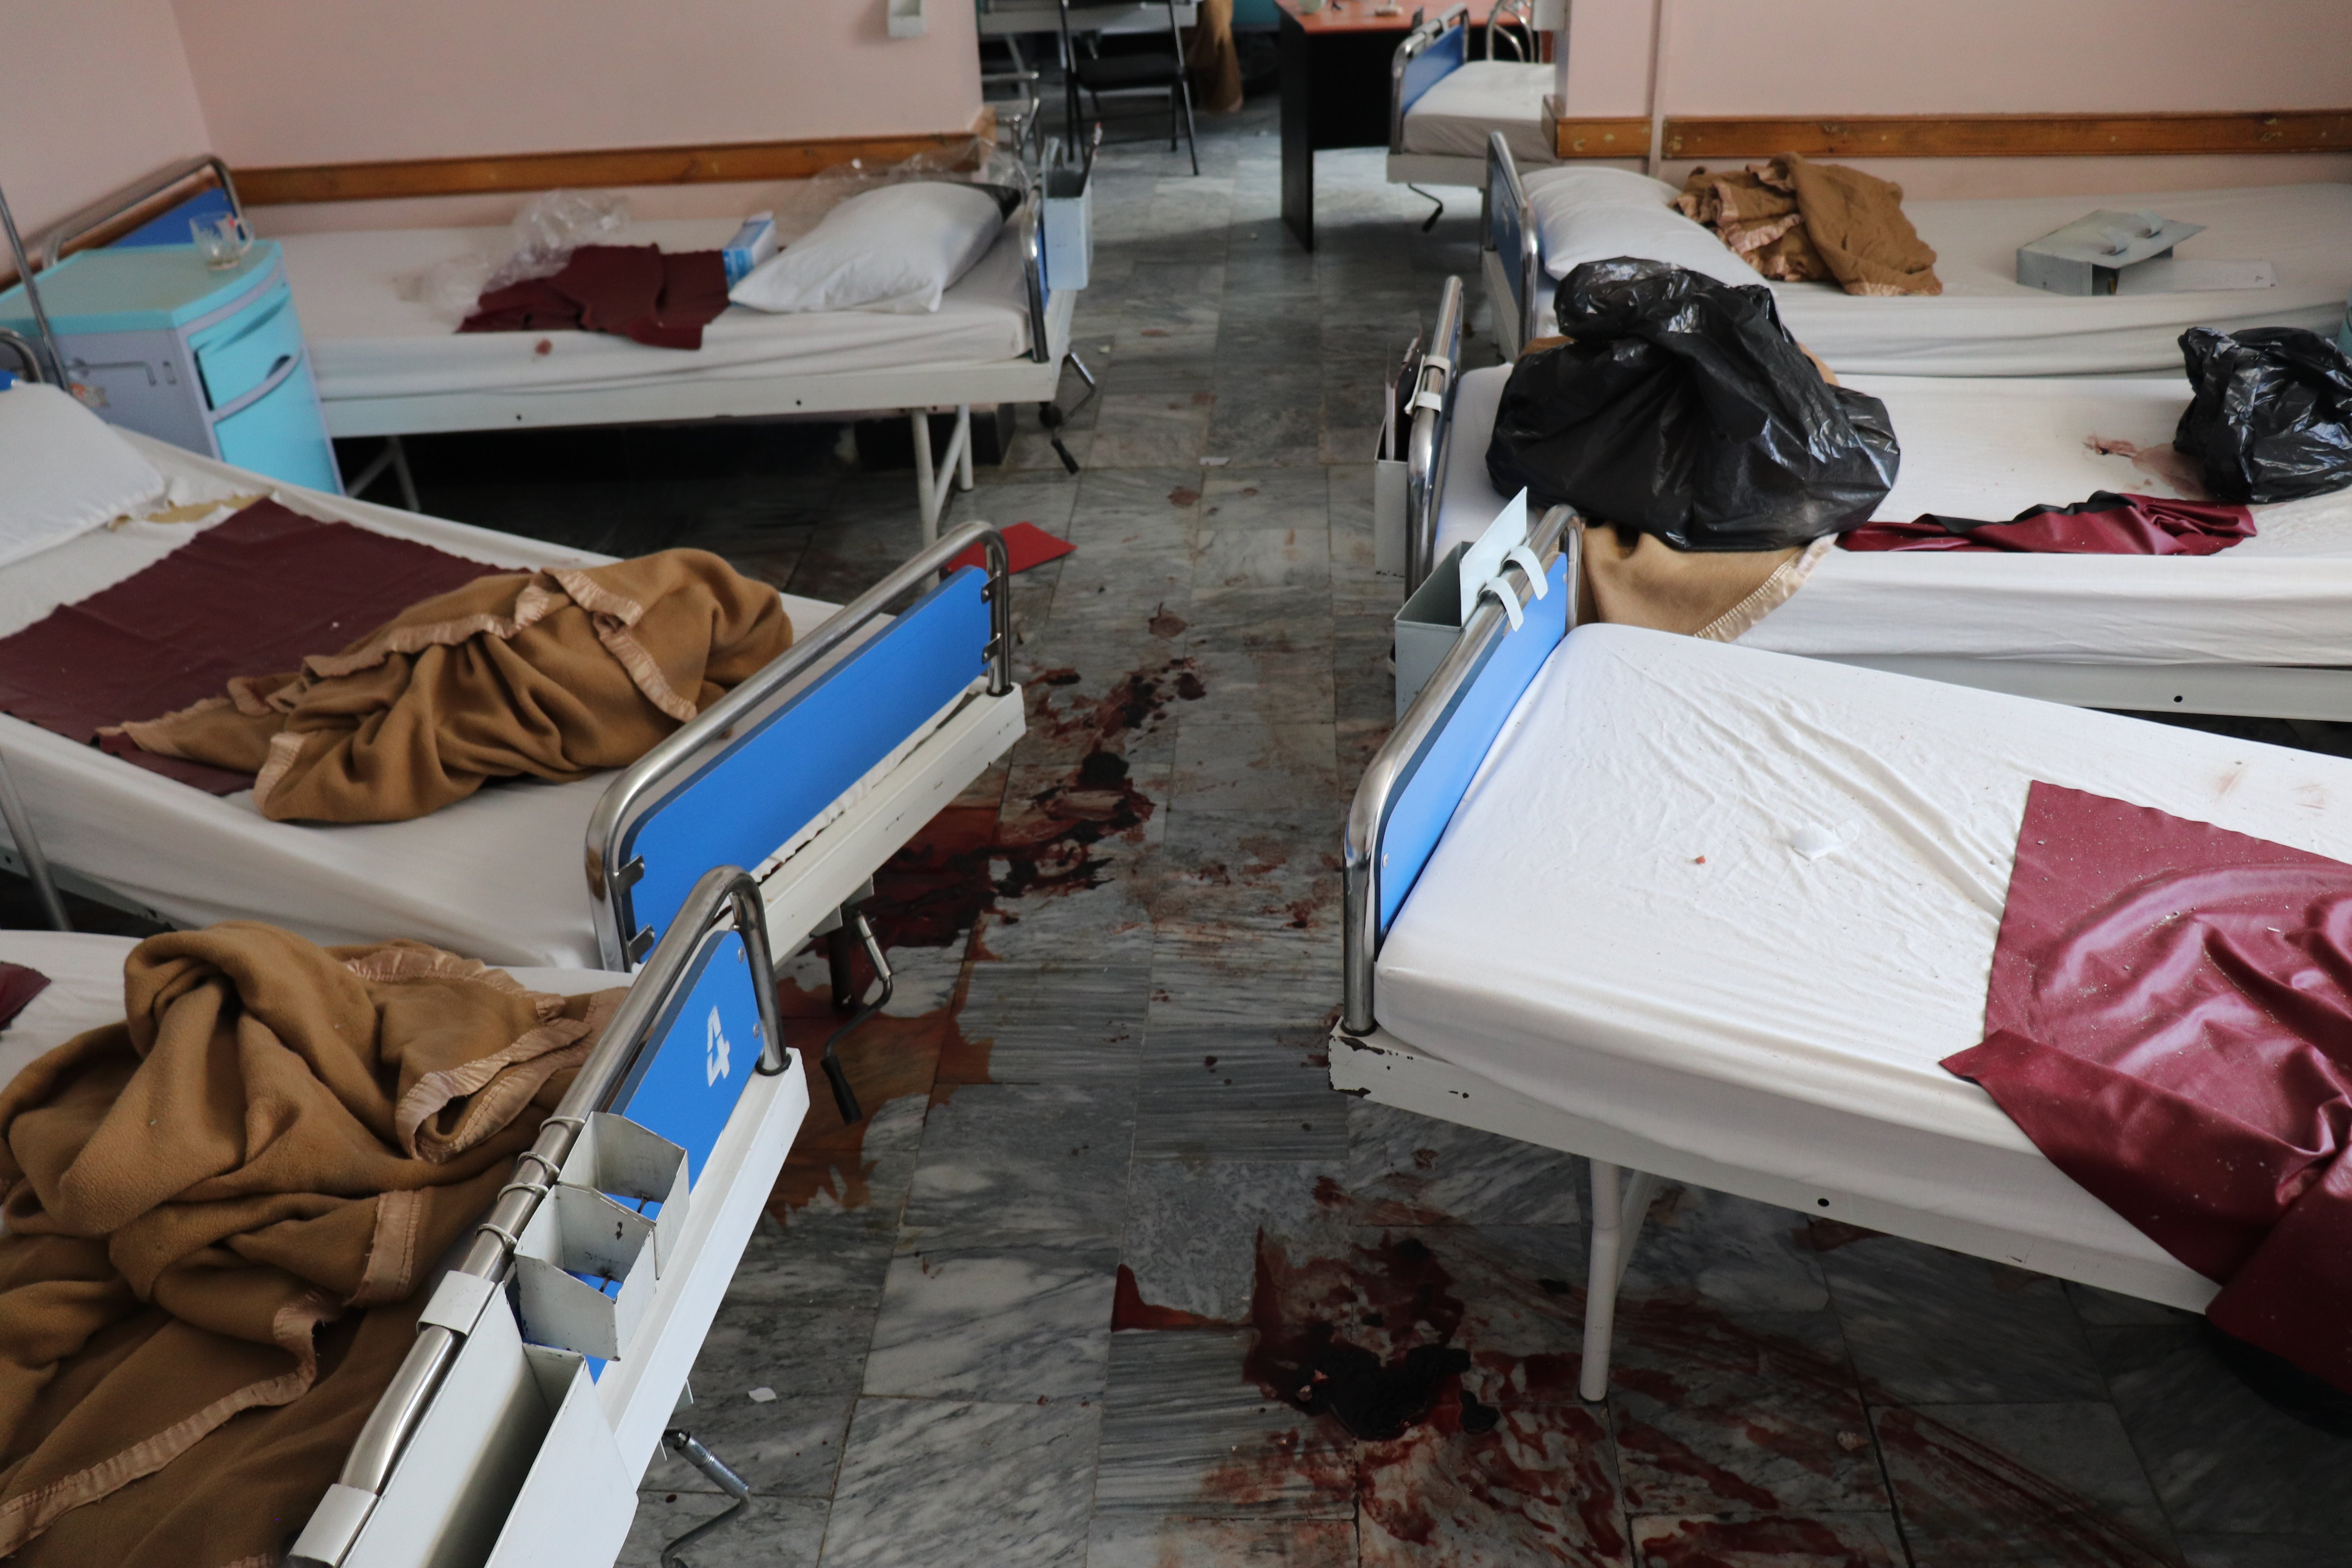 The maternity ward in Dasht-e-Barchi Hospital, Kabul